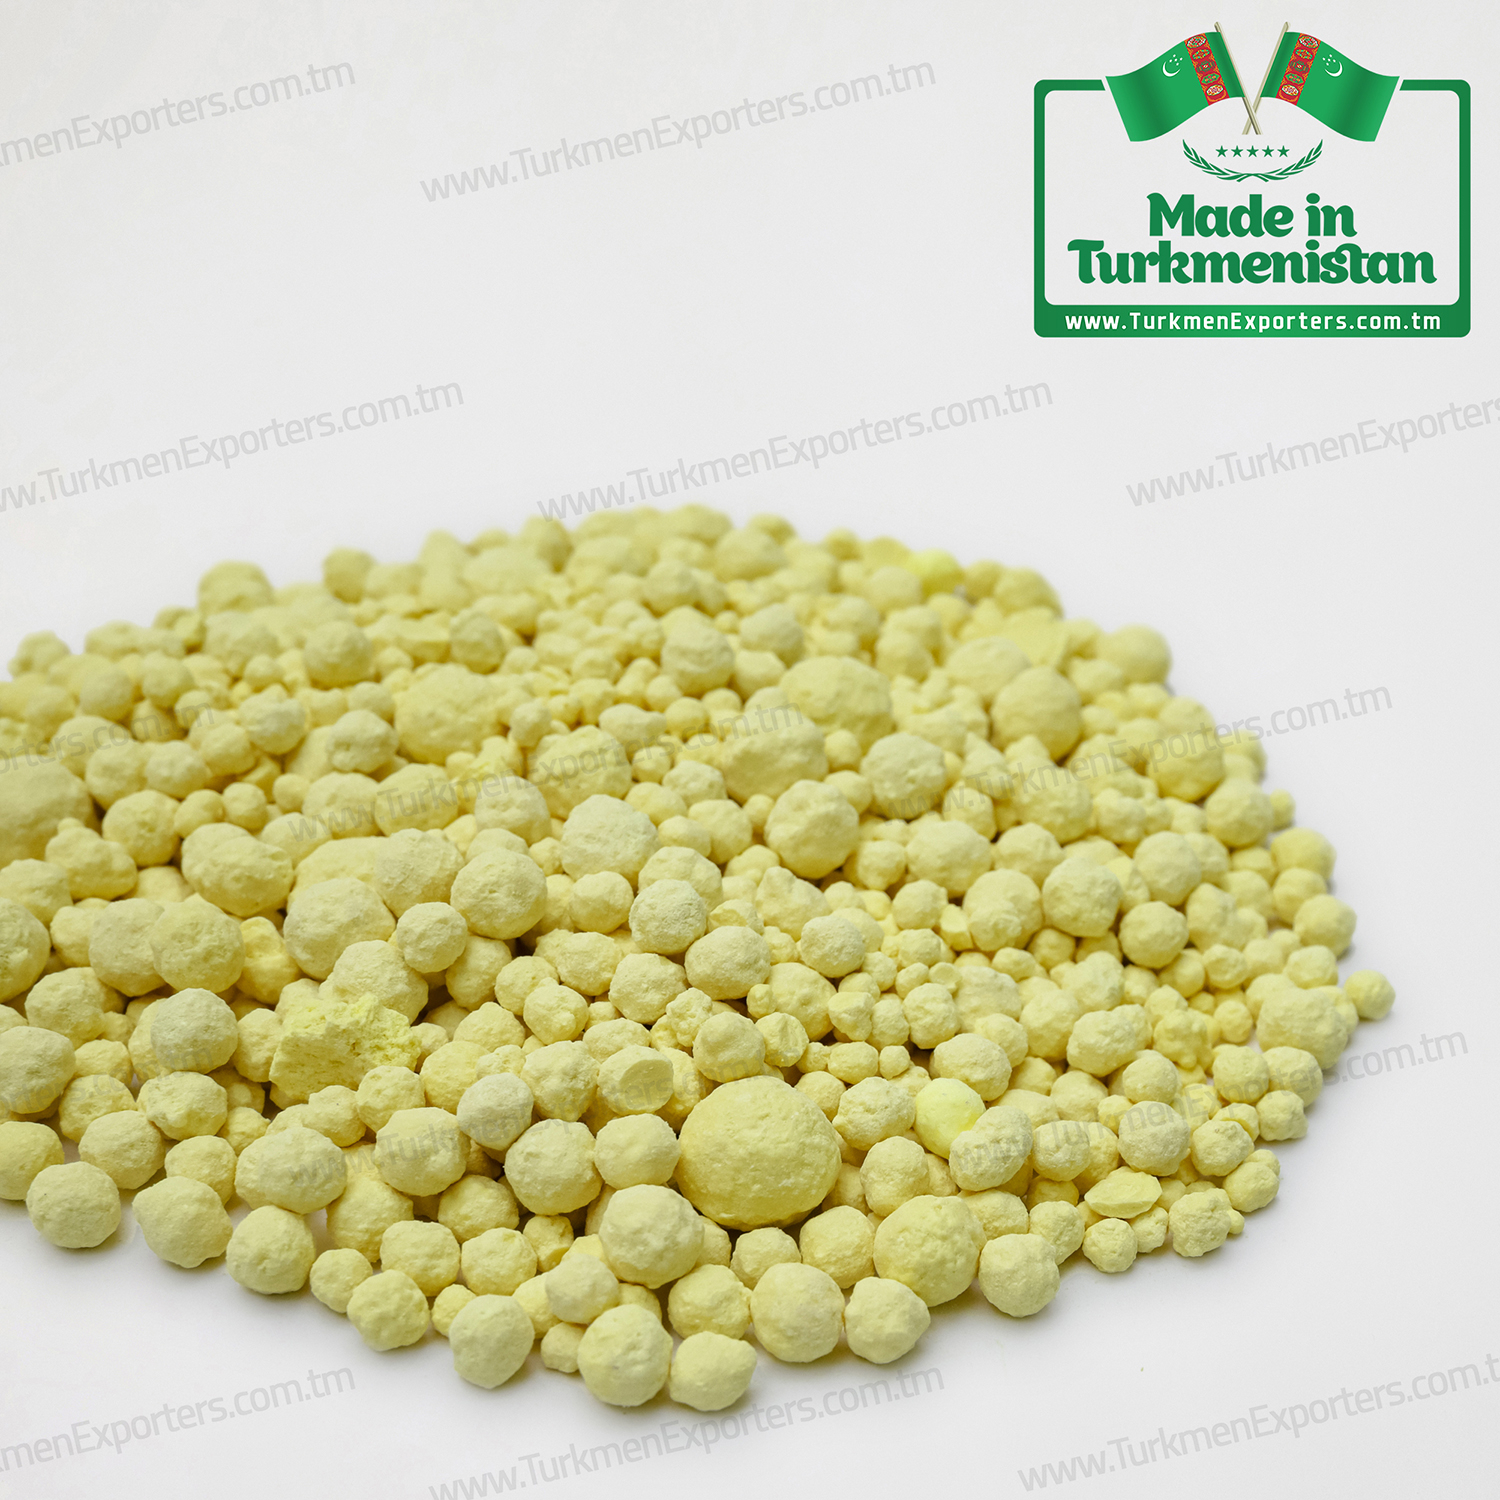 Granular sulphur in Turkmenistan wholesale for export | Turkmen Export, Import & Trading Services Company